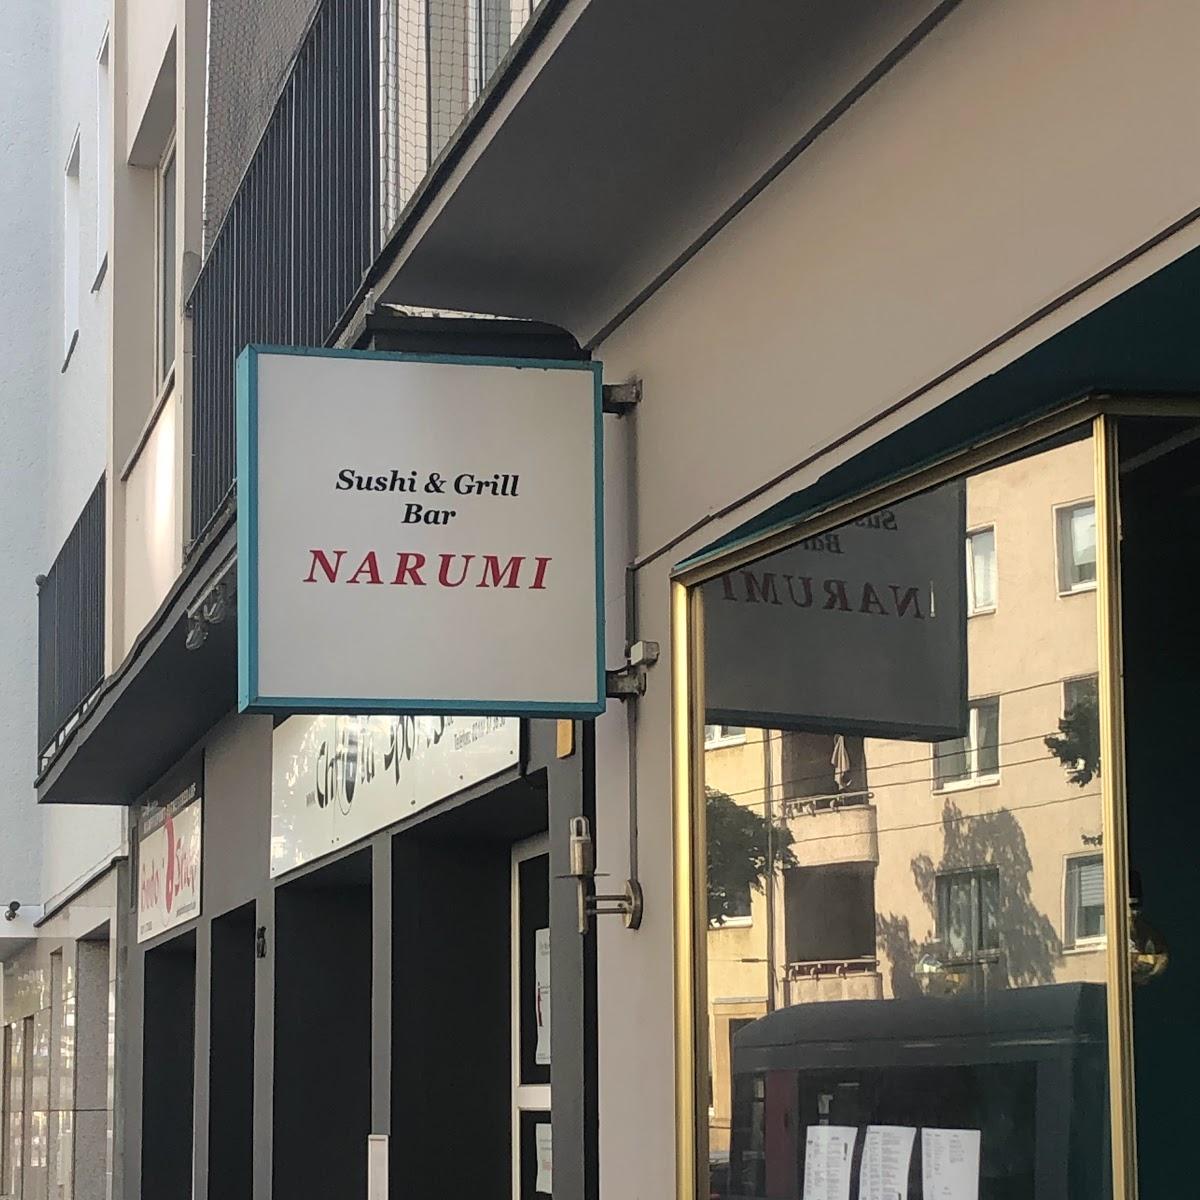 Restaurant "Narumi Sushi" in Düsseldorf